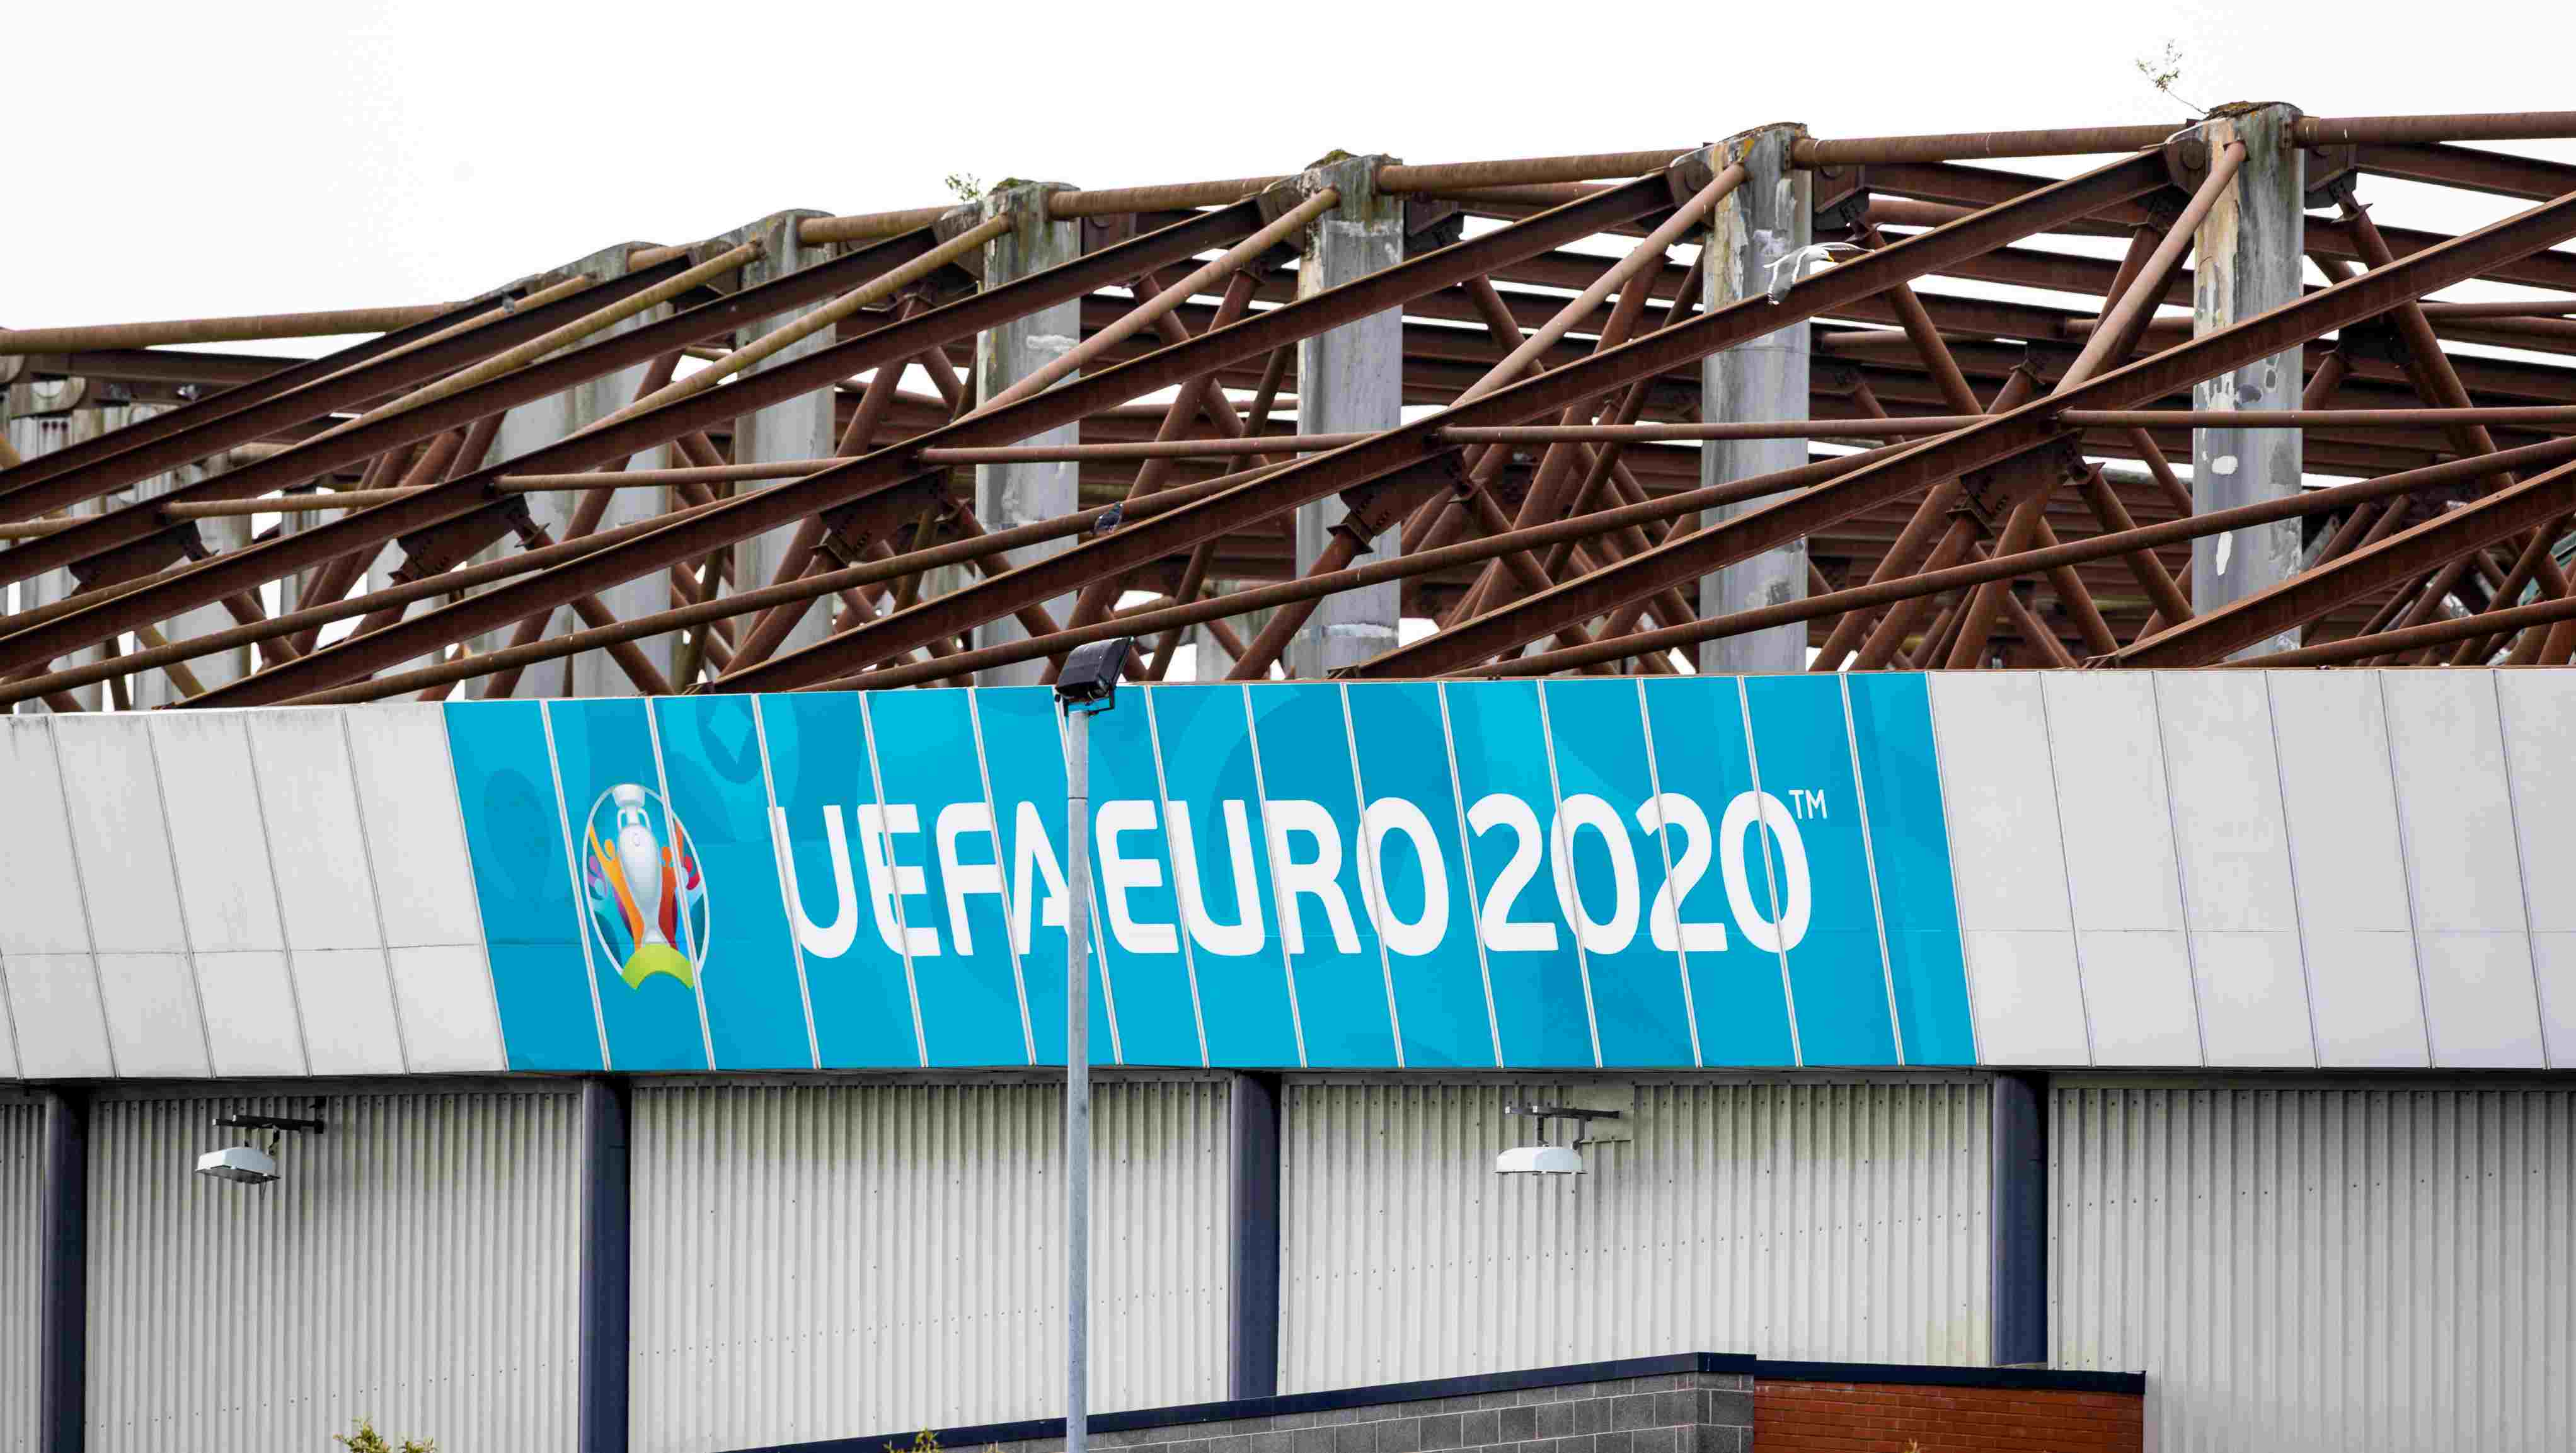 Euro 2020 banners decorate Hampden.